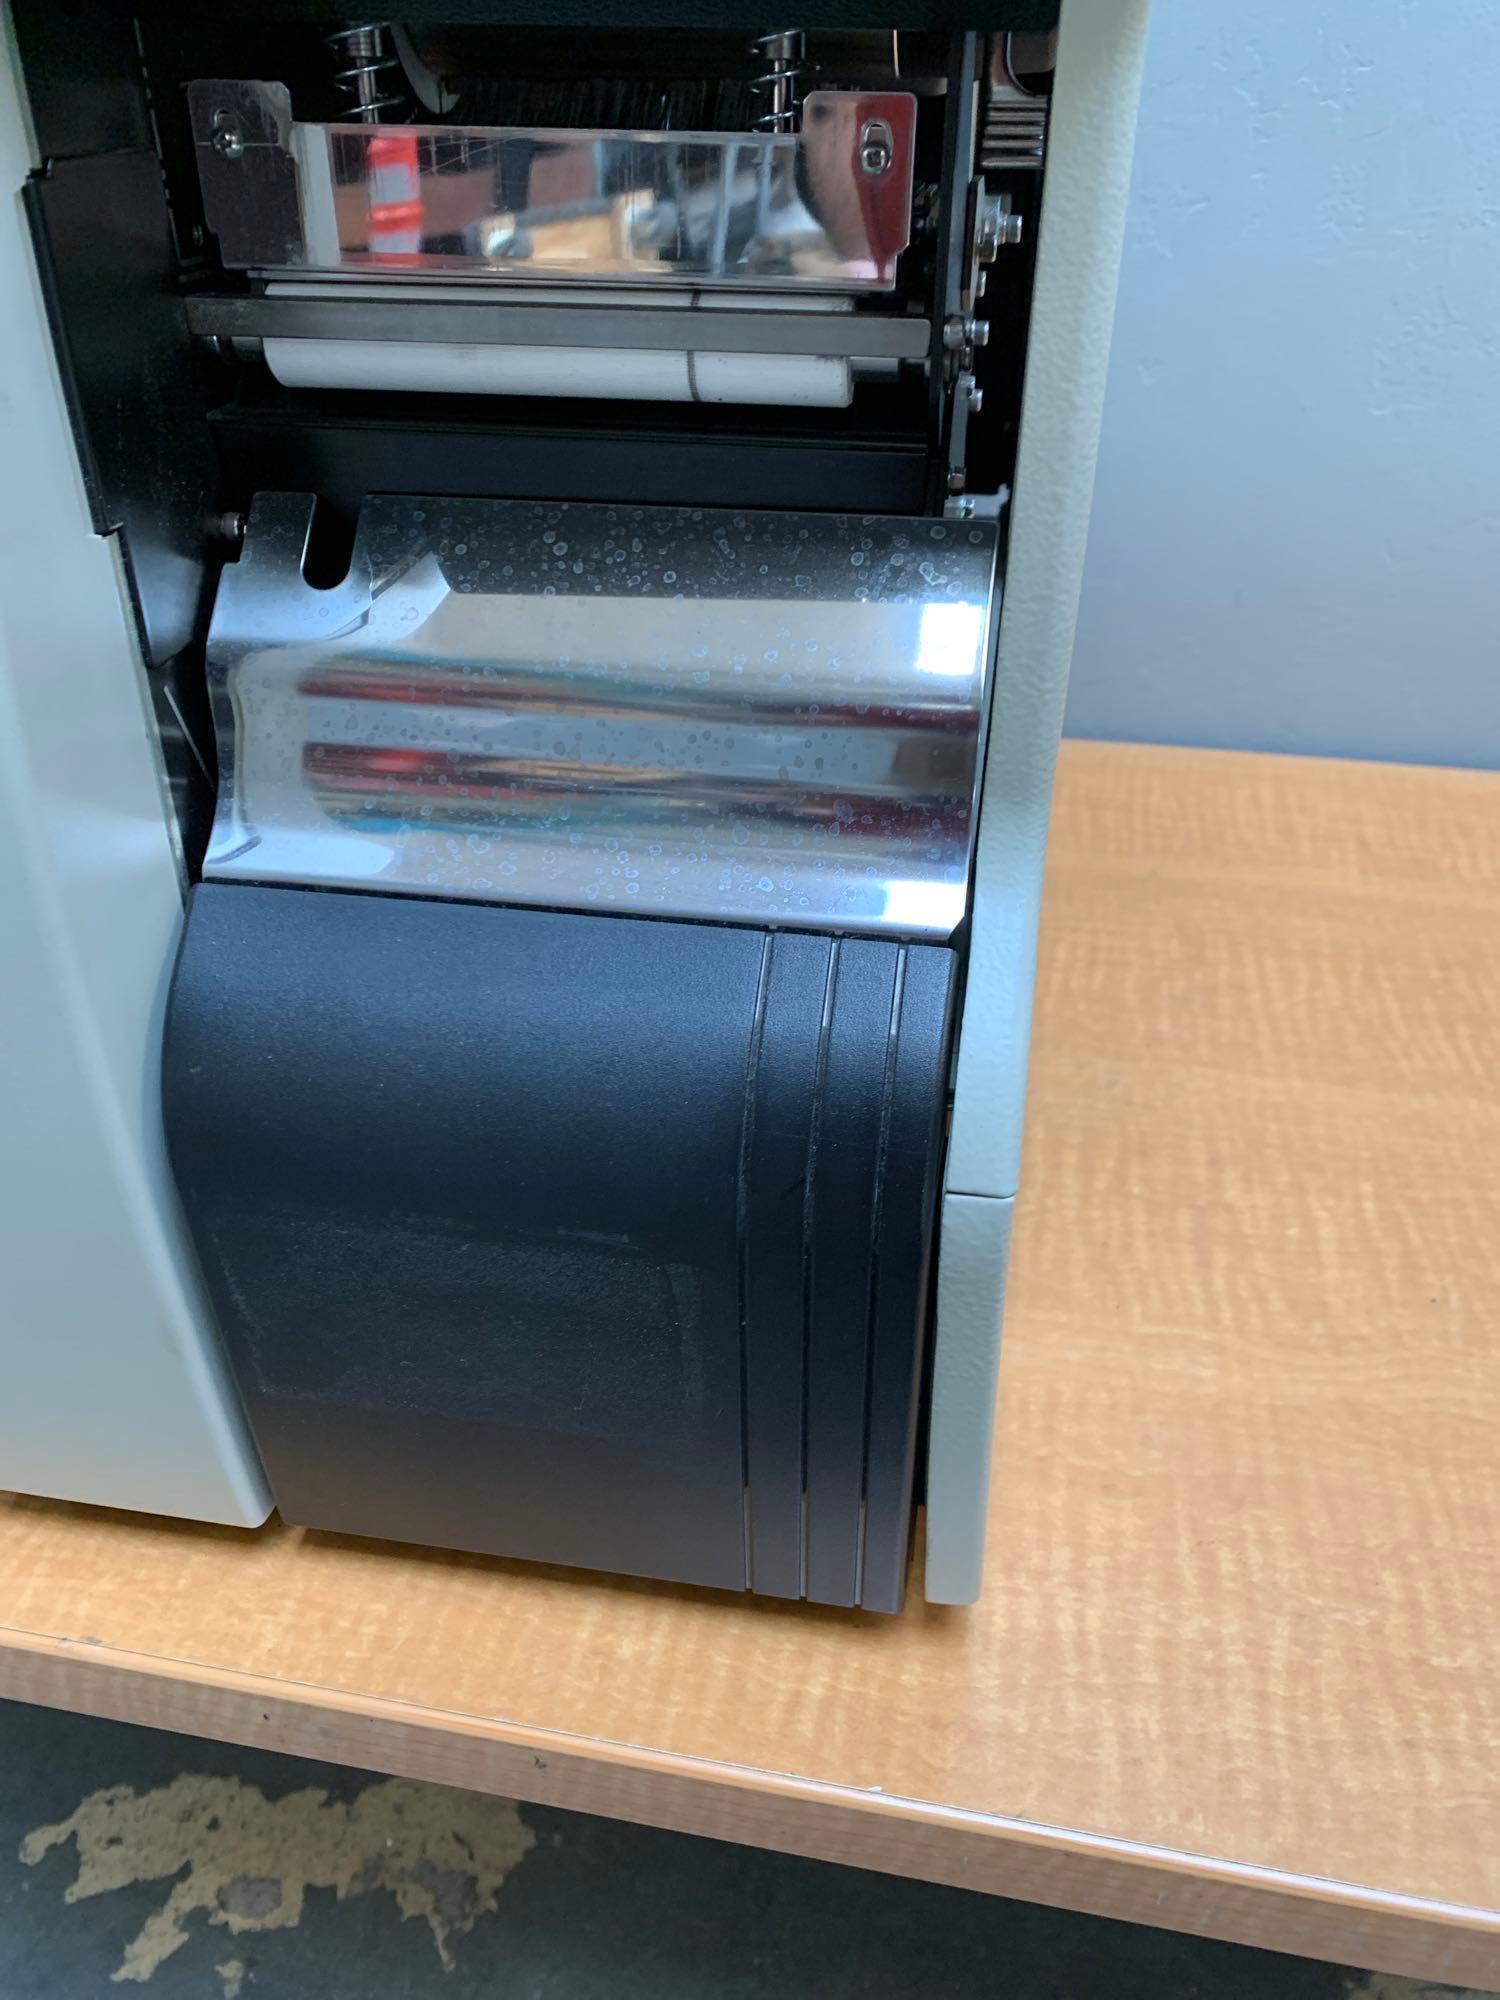 Zebra 110XI4 Industrial Barcode Label Printer